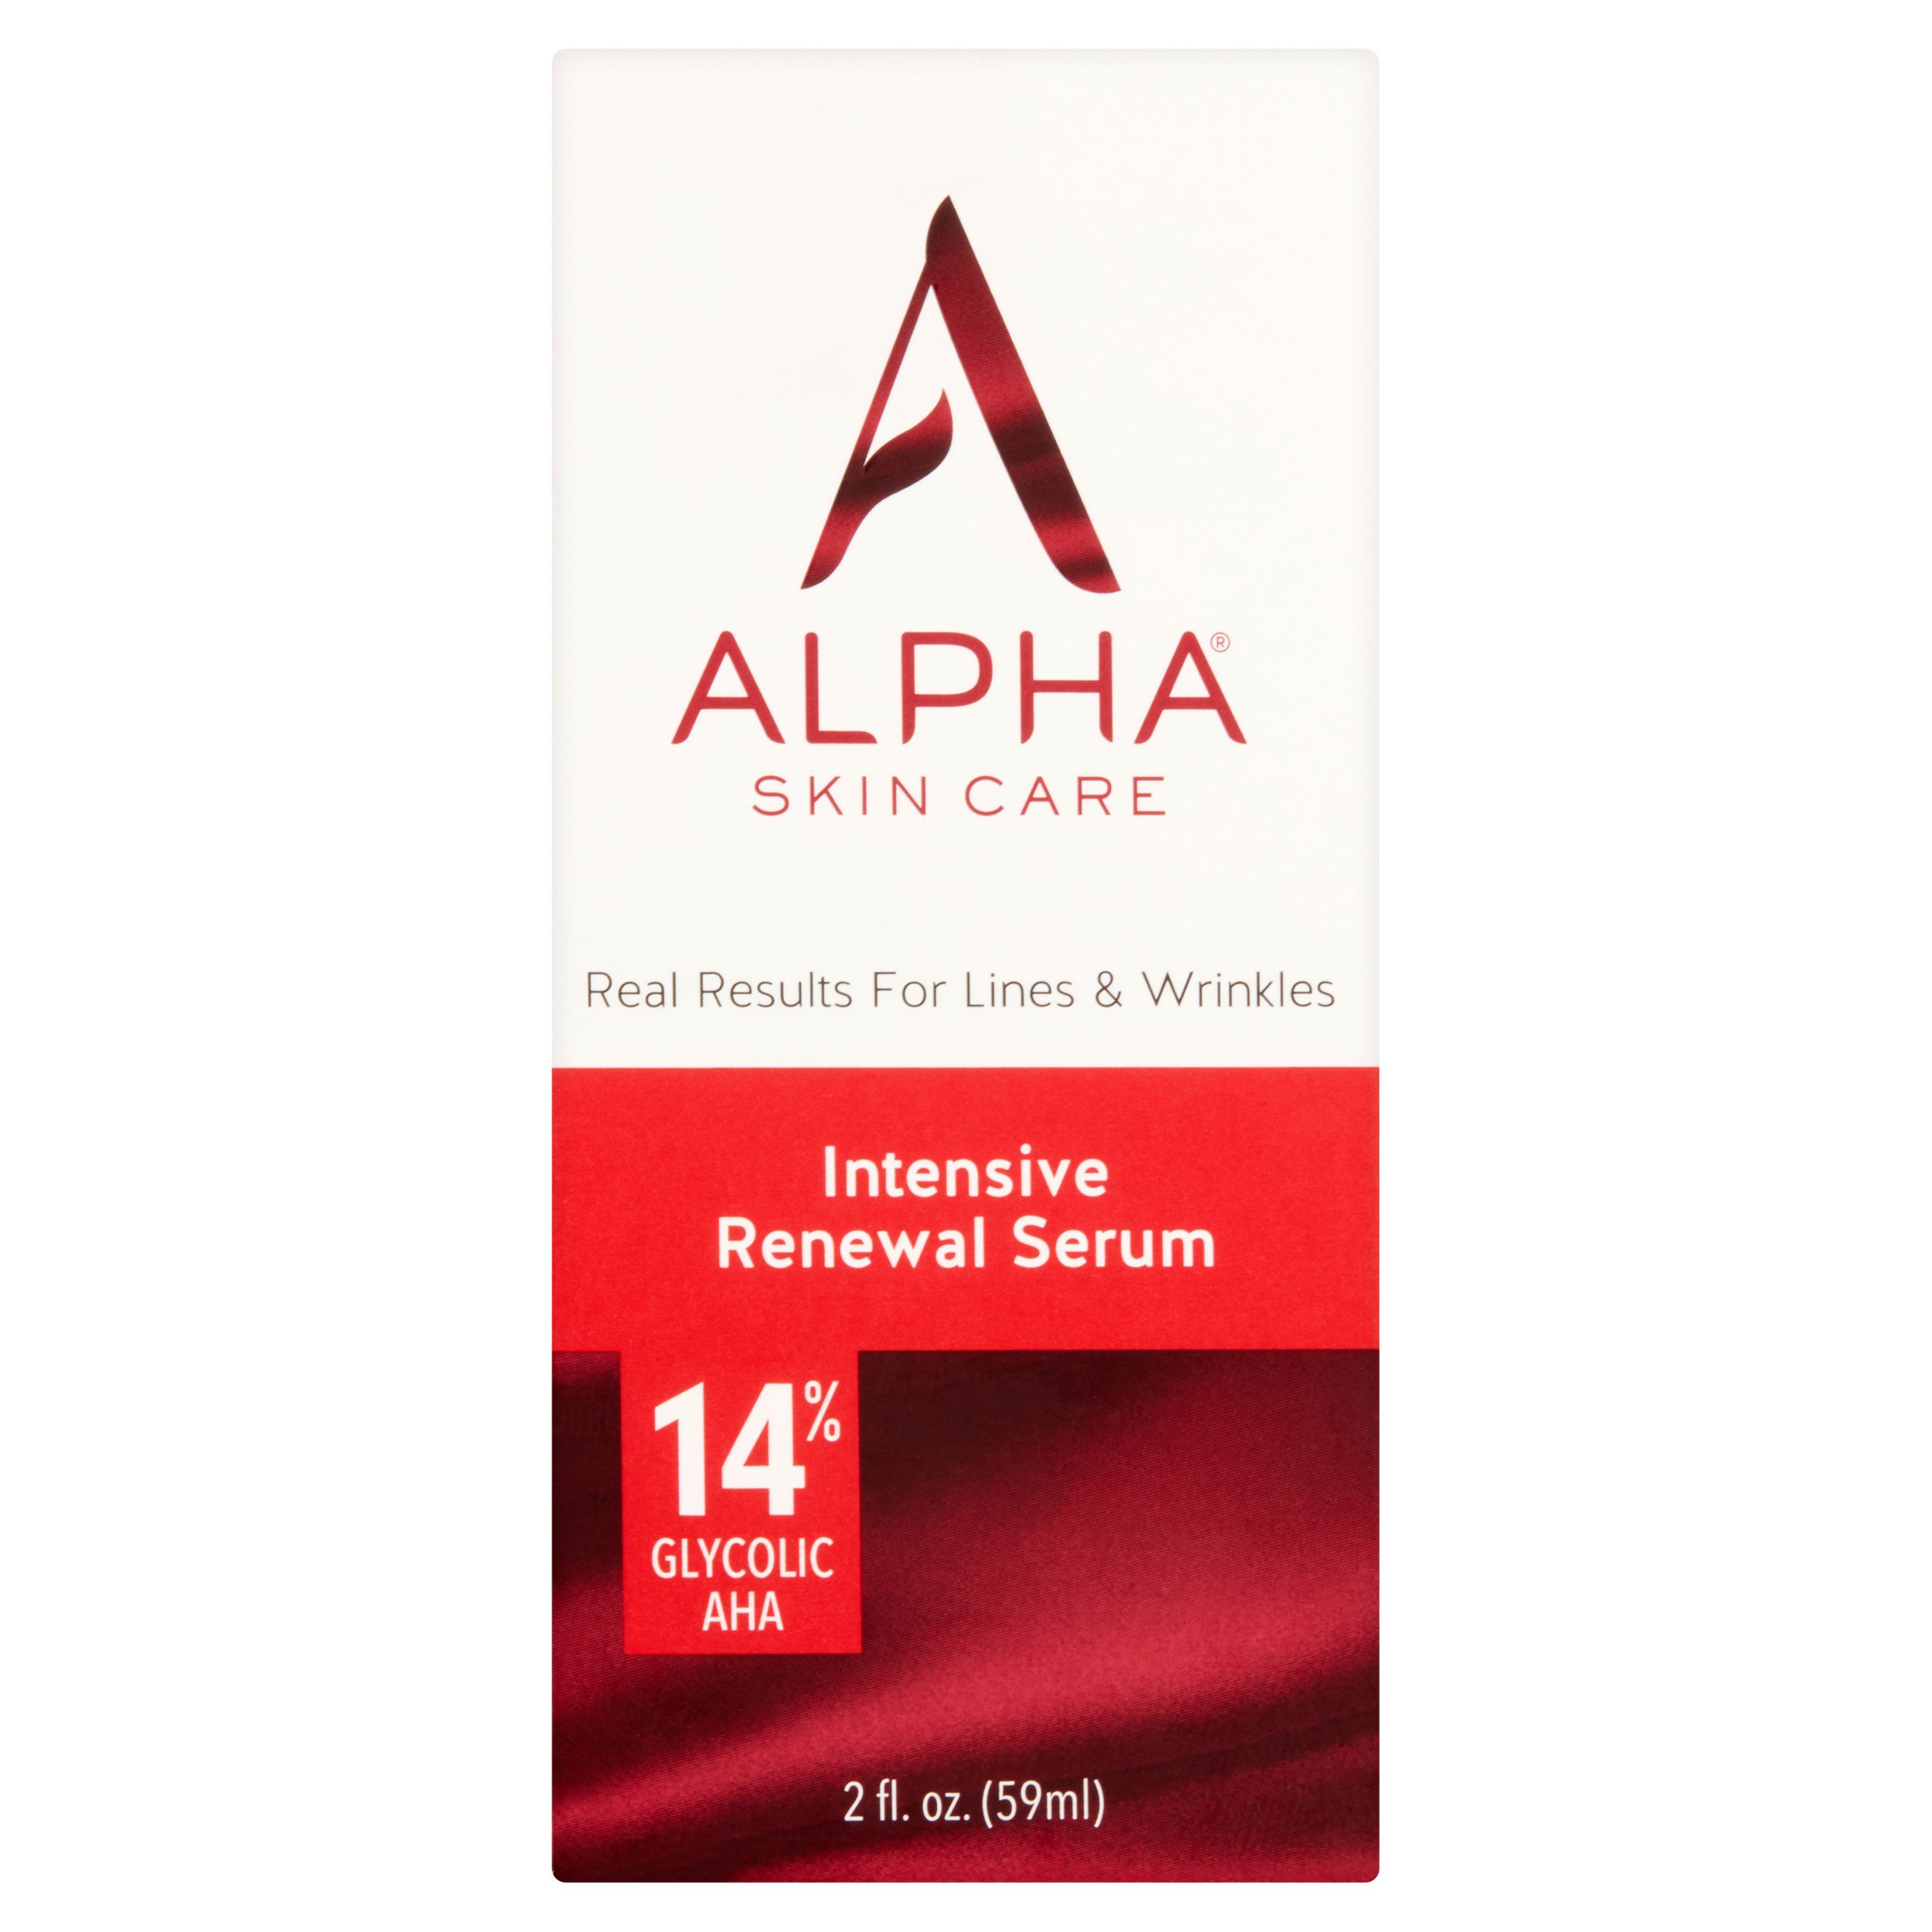 Alpha Skin Care Intensive Renewal Serum, 2 fl oz - image 1 of 5